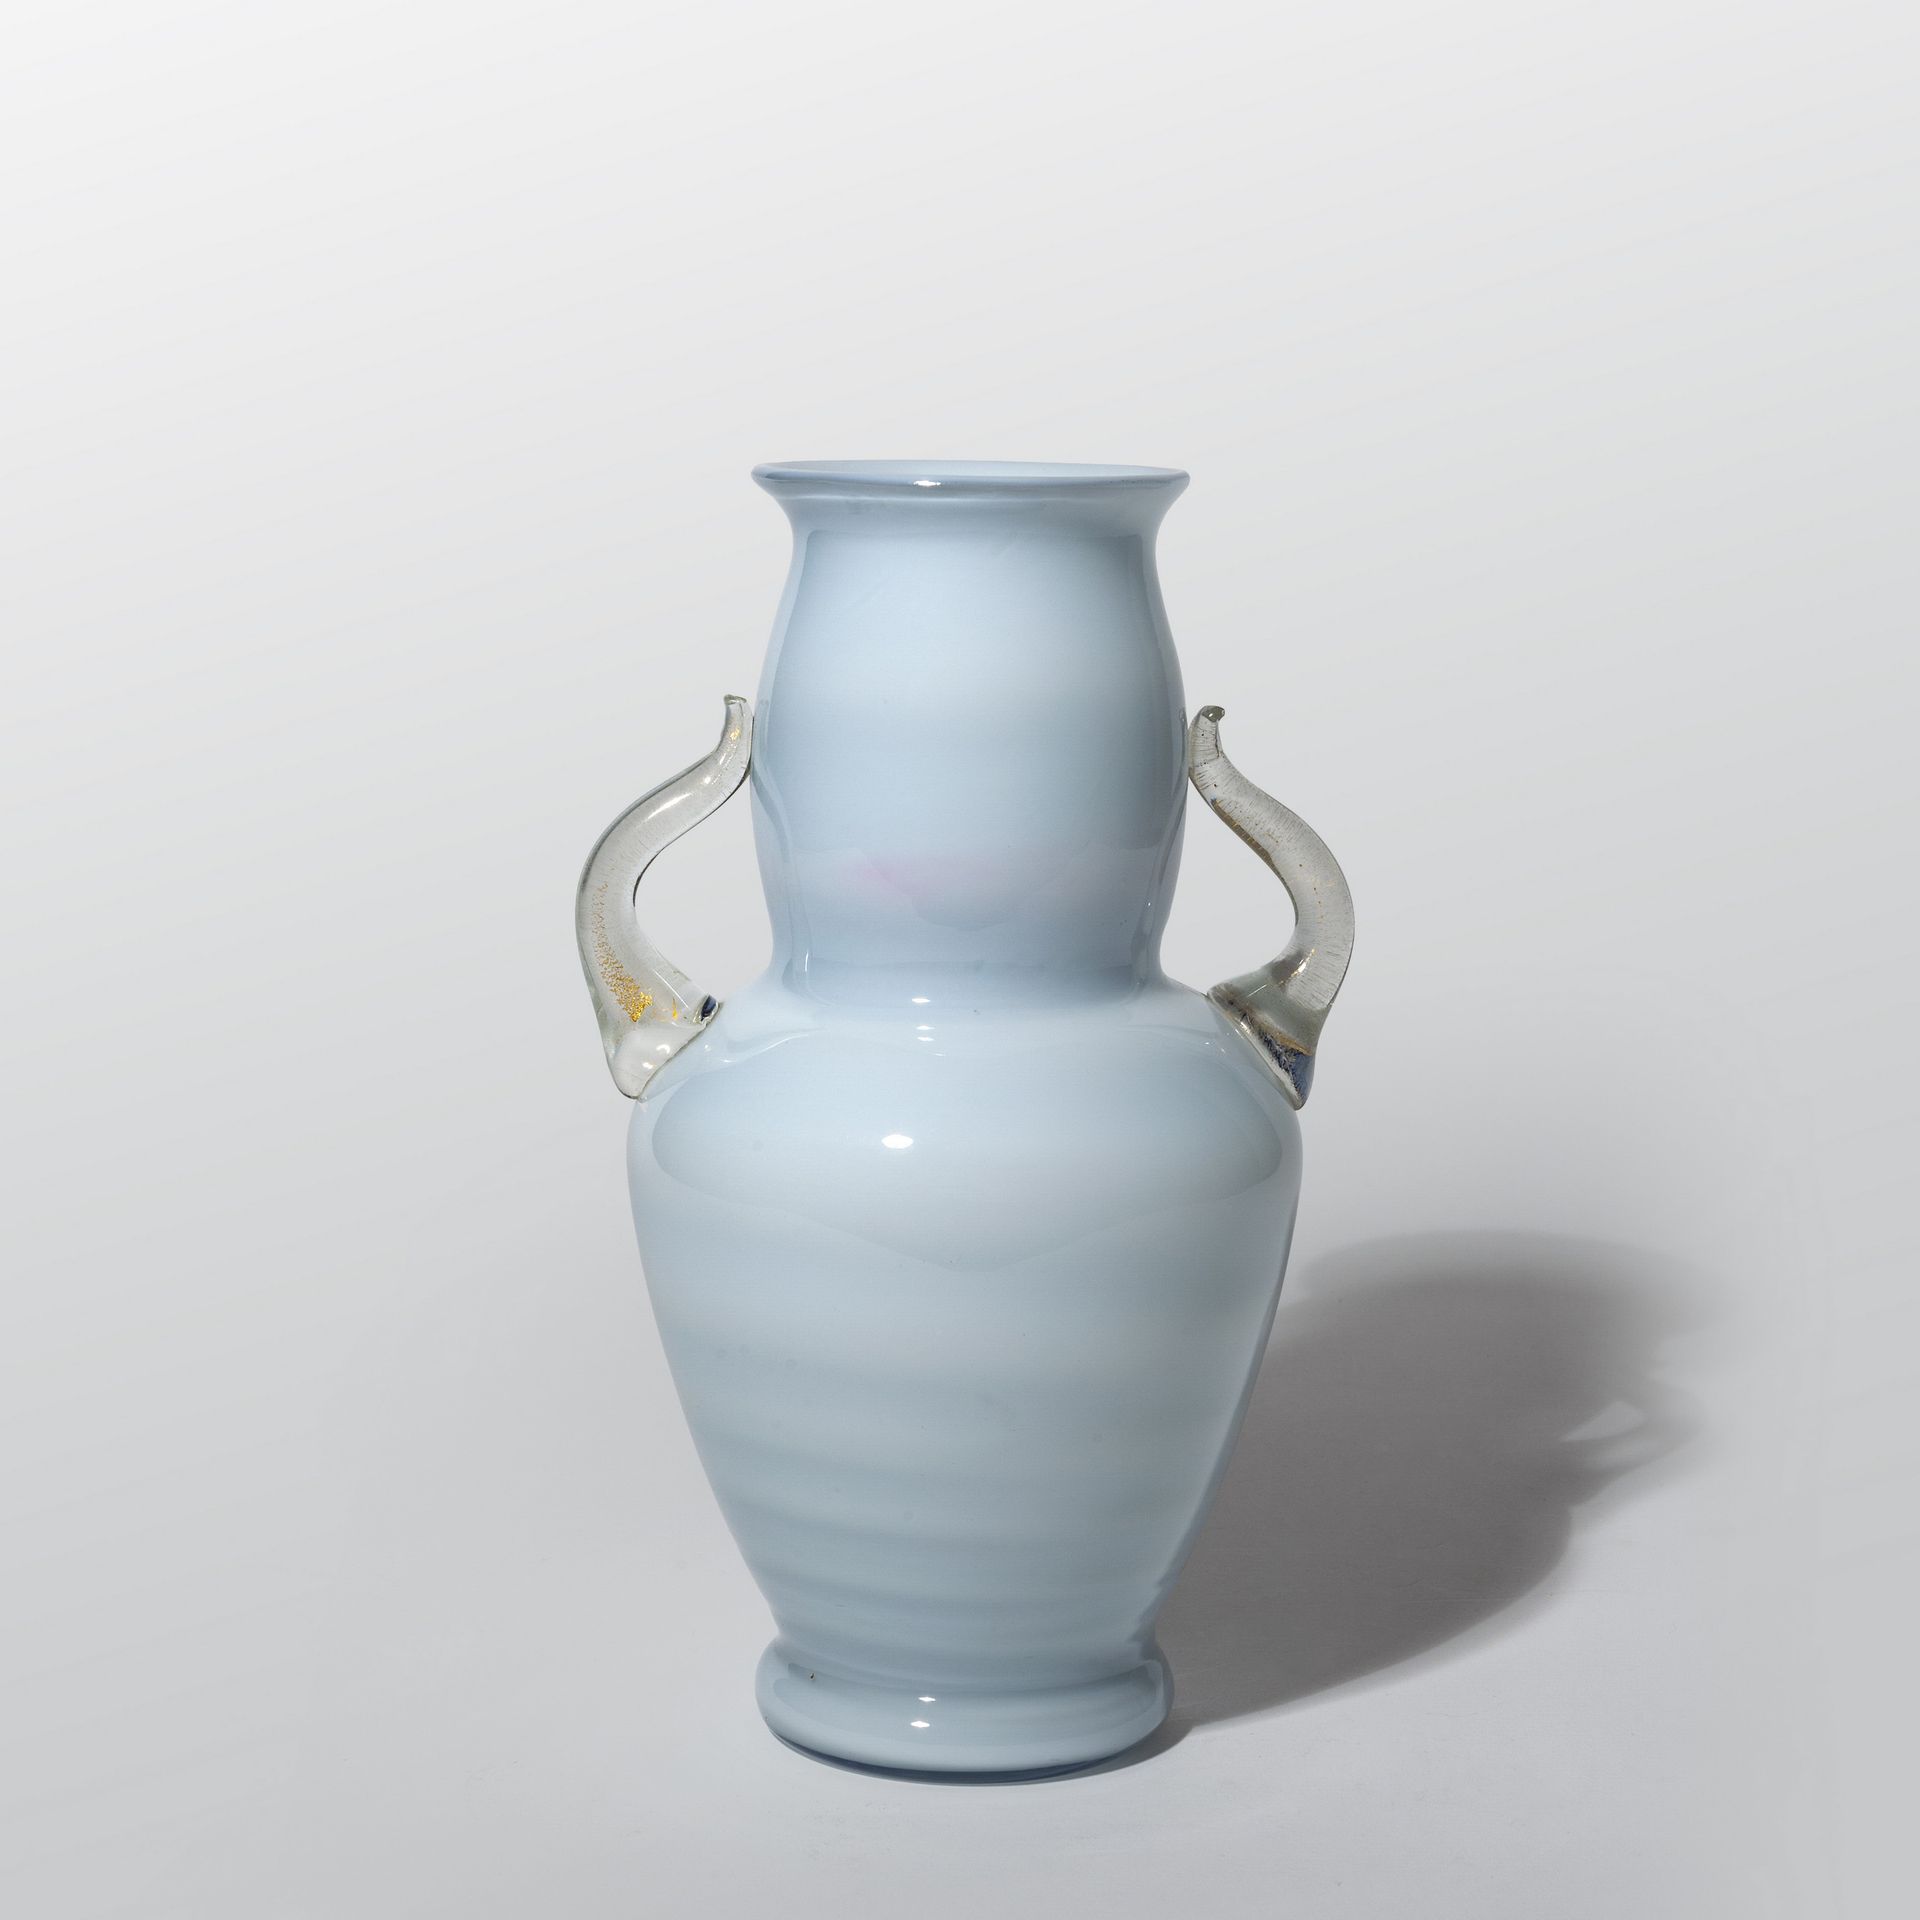 BAROVIER SEGUSO FERRO BAROVIER SEGUSO FERRO
A lacquered and bluish glass vase wi&hellip;